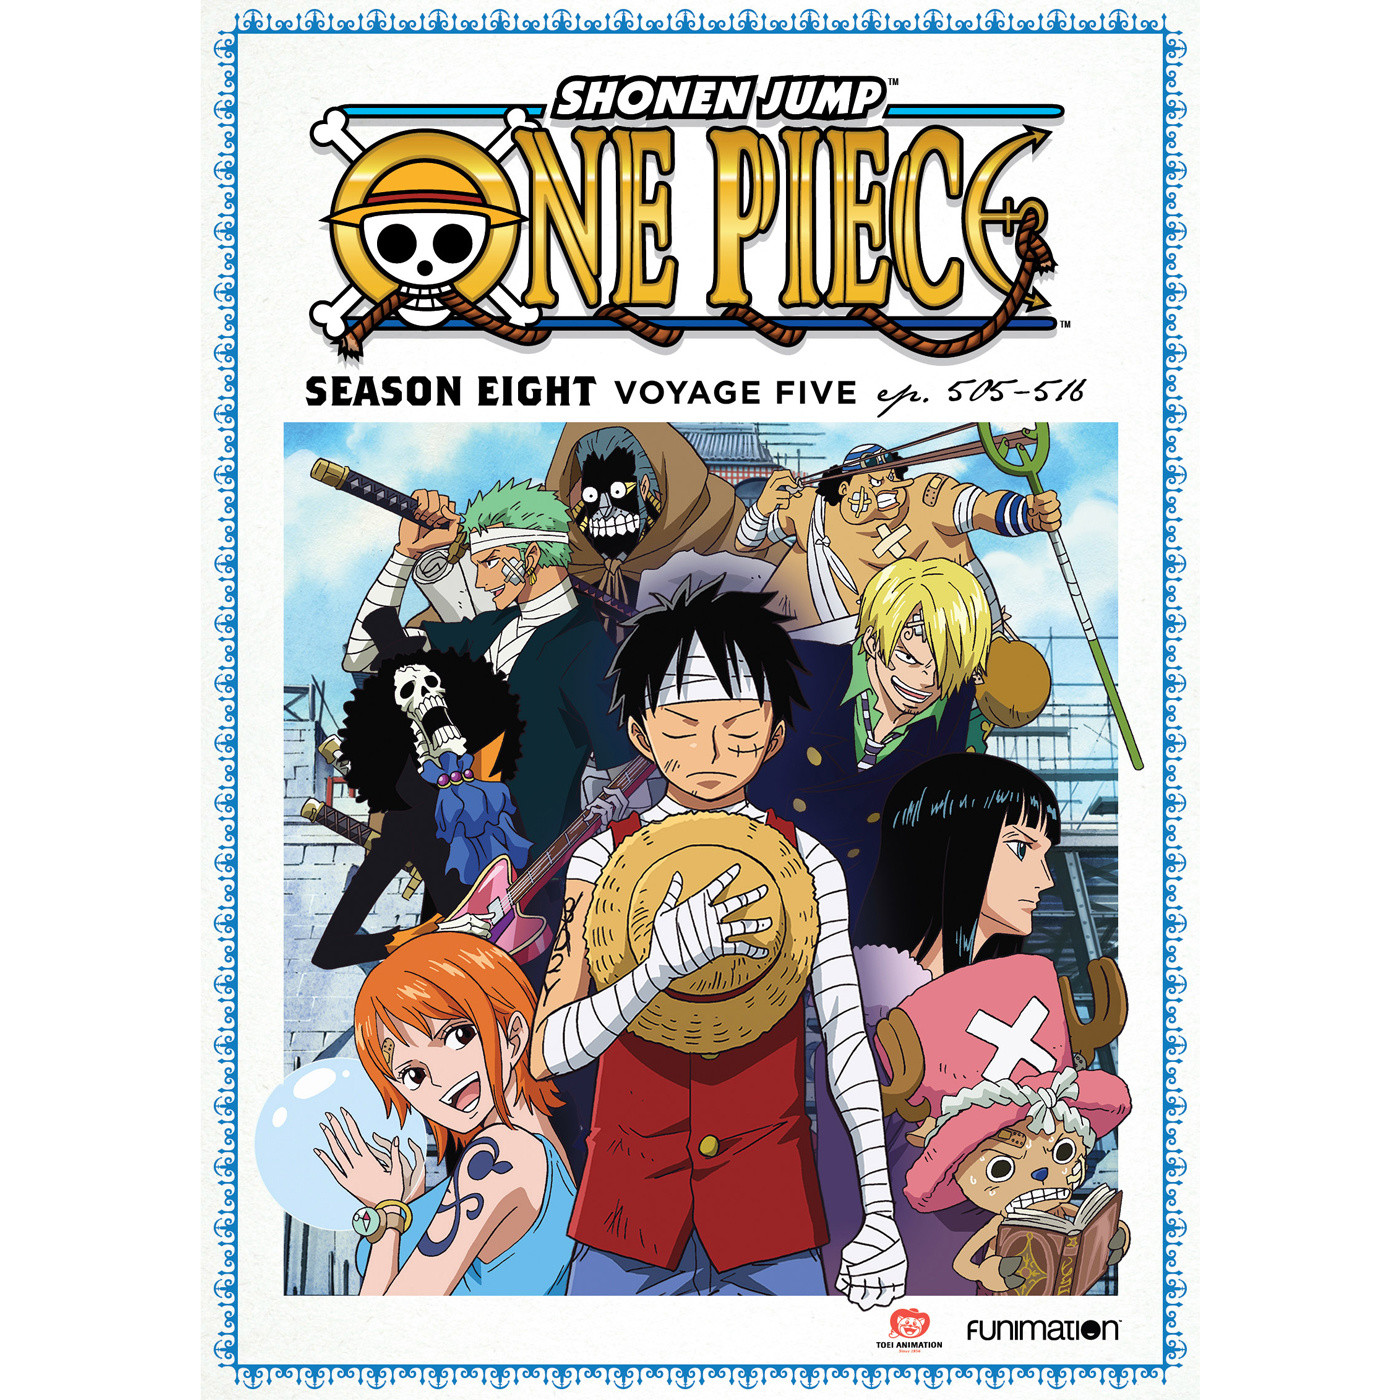 One Piece Season 8 Voyage 5 Dvd Tokyo Otaku Mode Tom